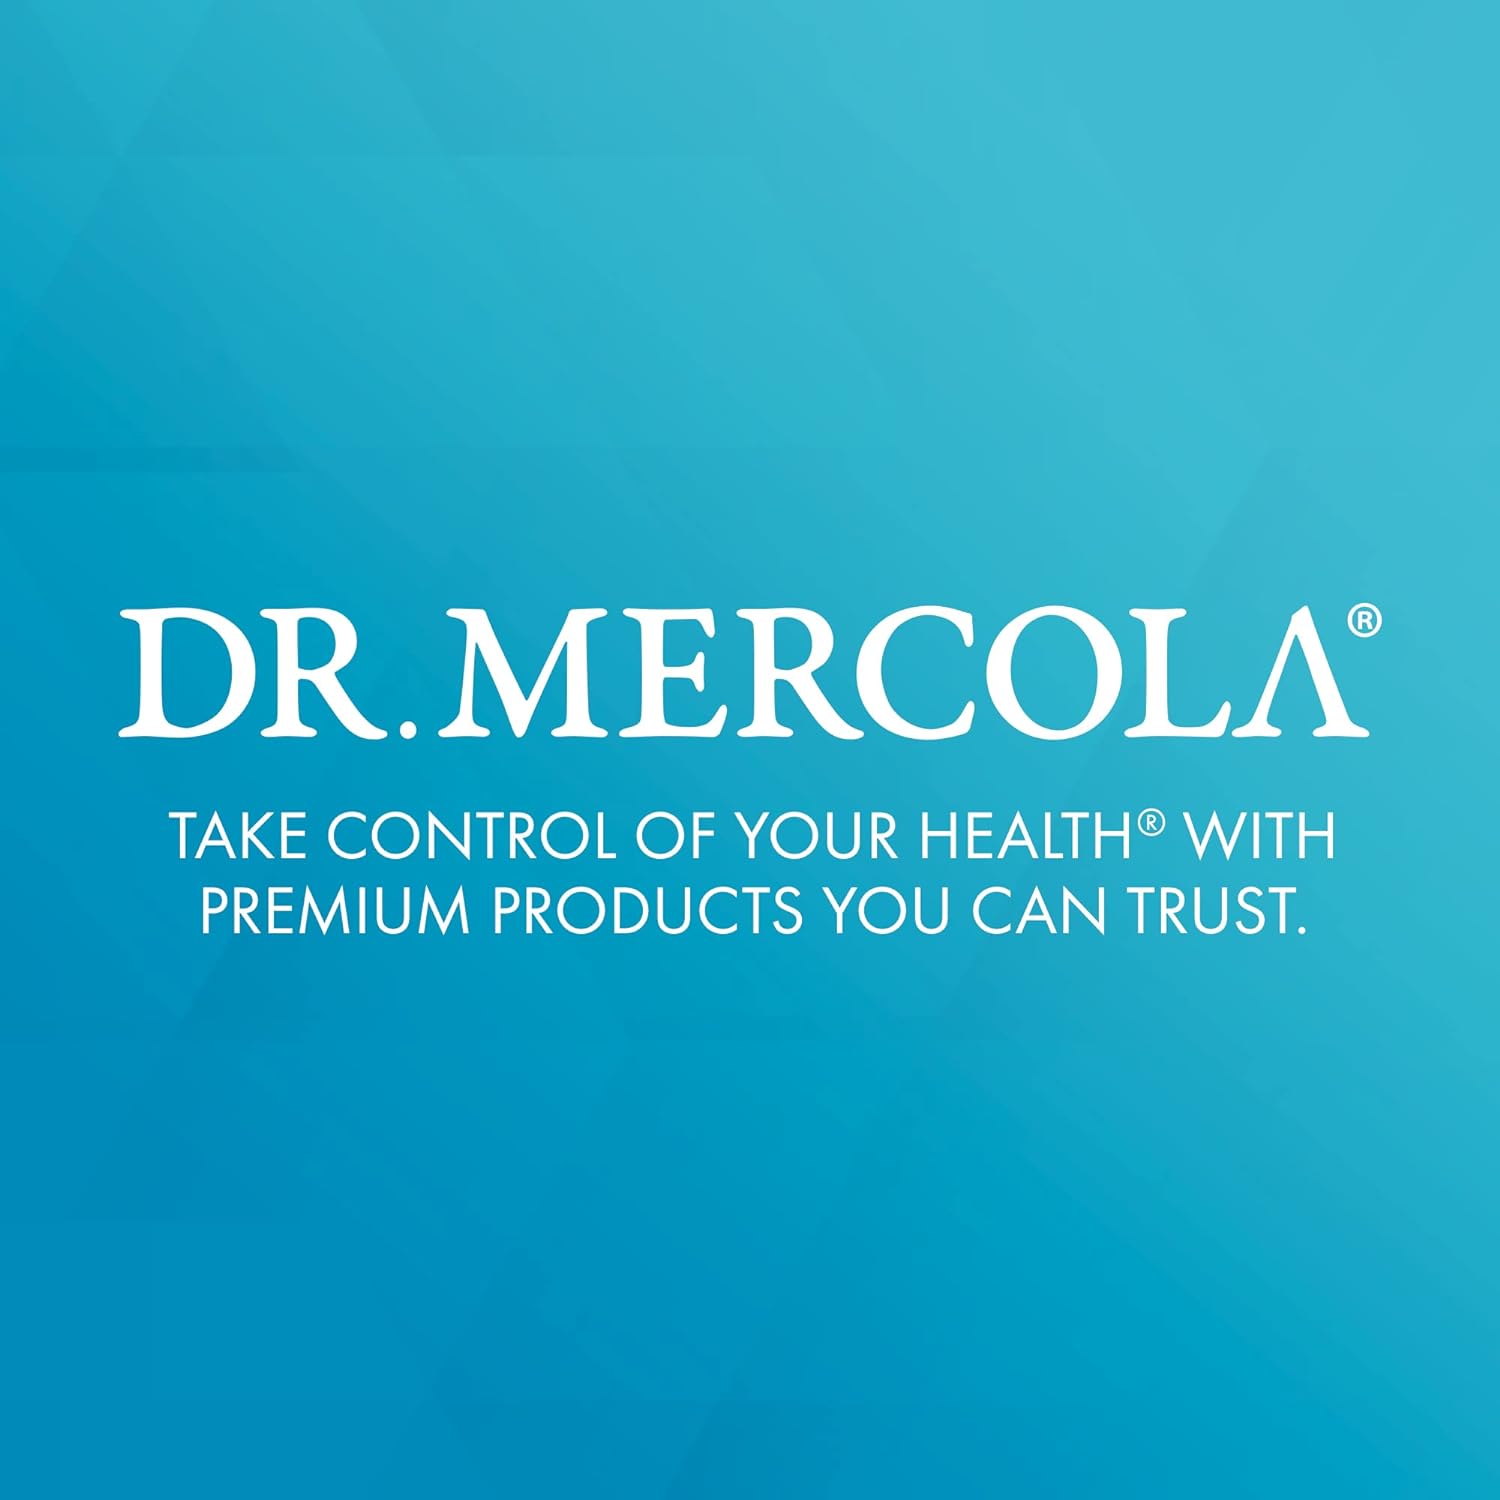 Dr. Mercola Niacin Vitamin B3, 90 Servings (270 Tablets), Dietary Supplement, Mini Tabs, Essential B Vitamin, Non-GMO